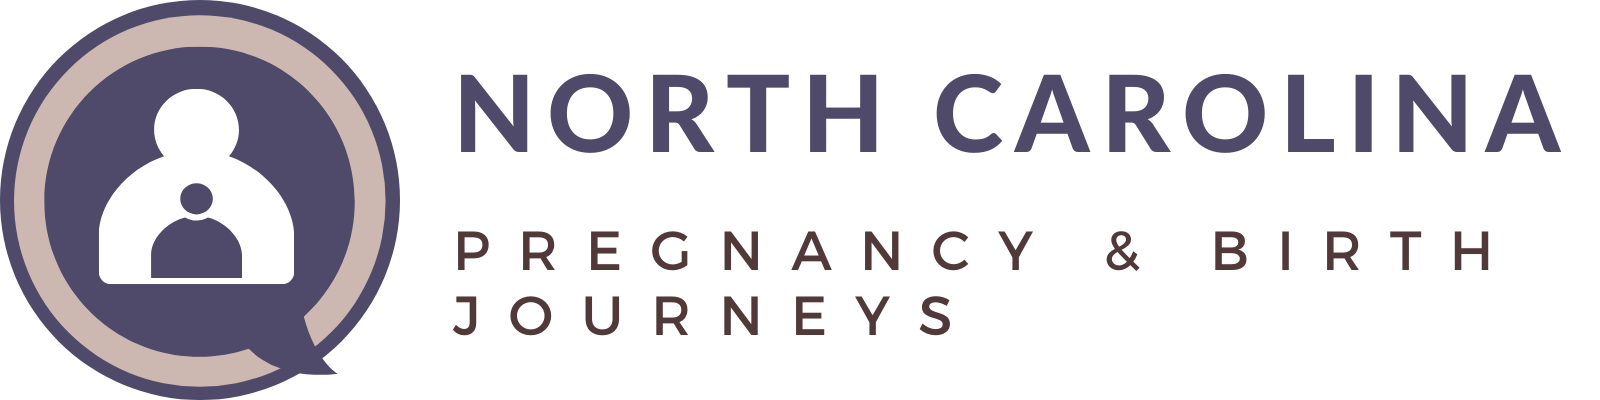 North Carolina Pregnancy & Birth Journeys Logo